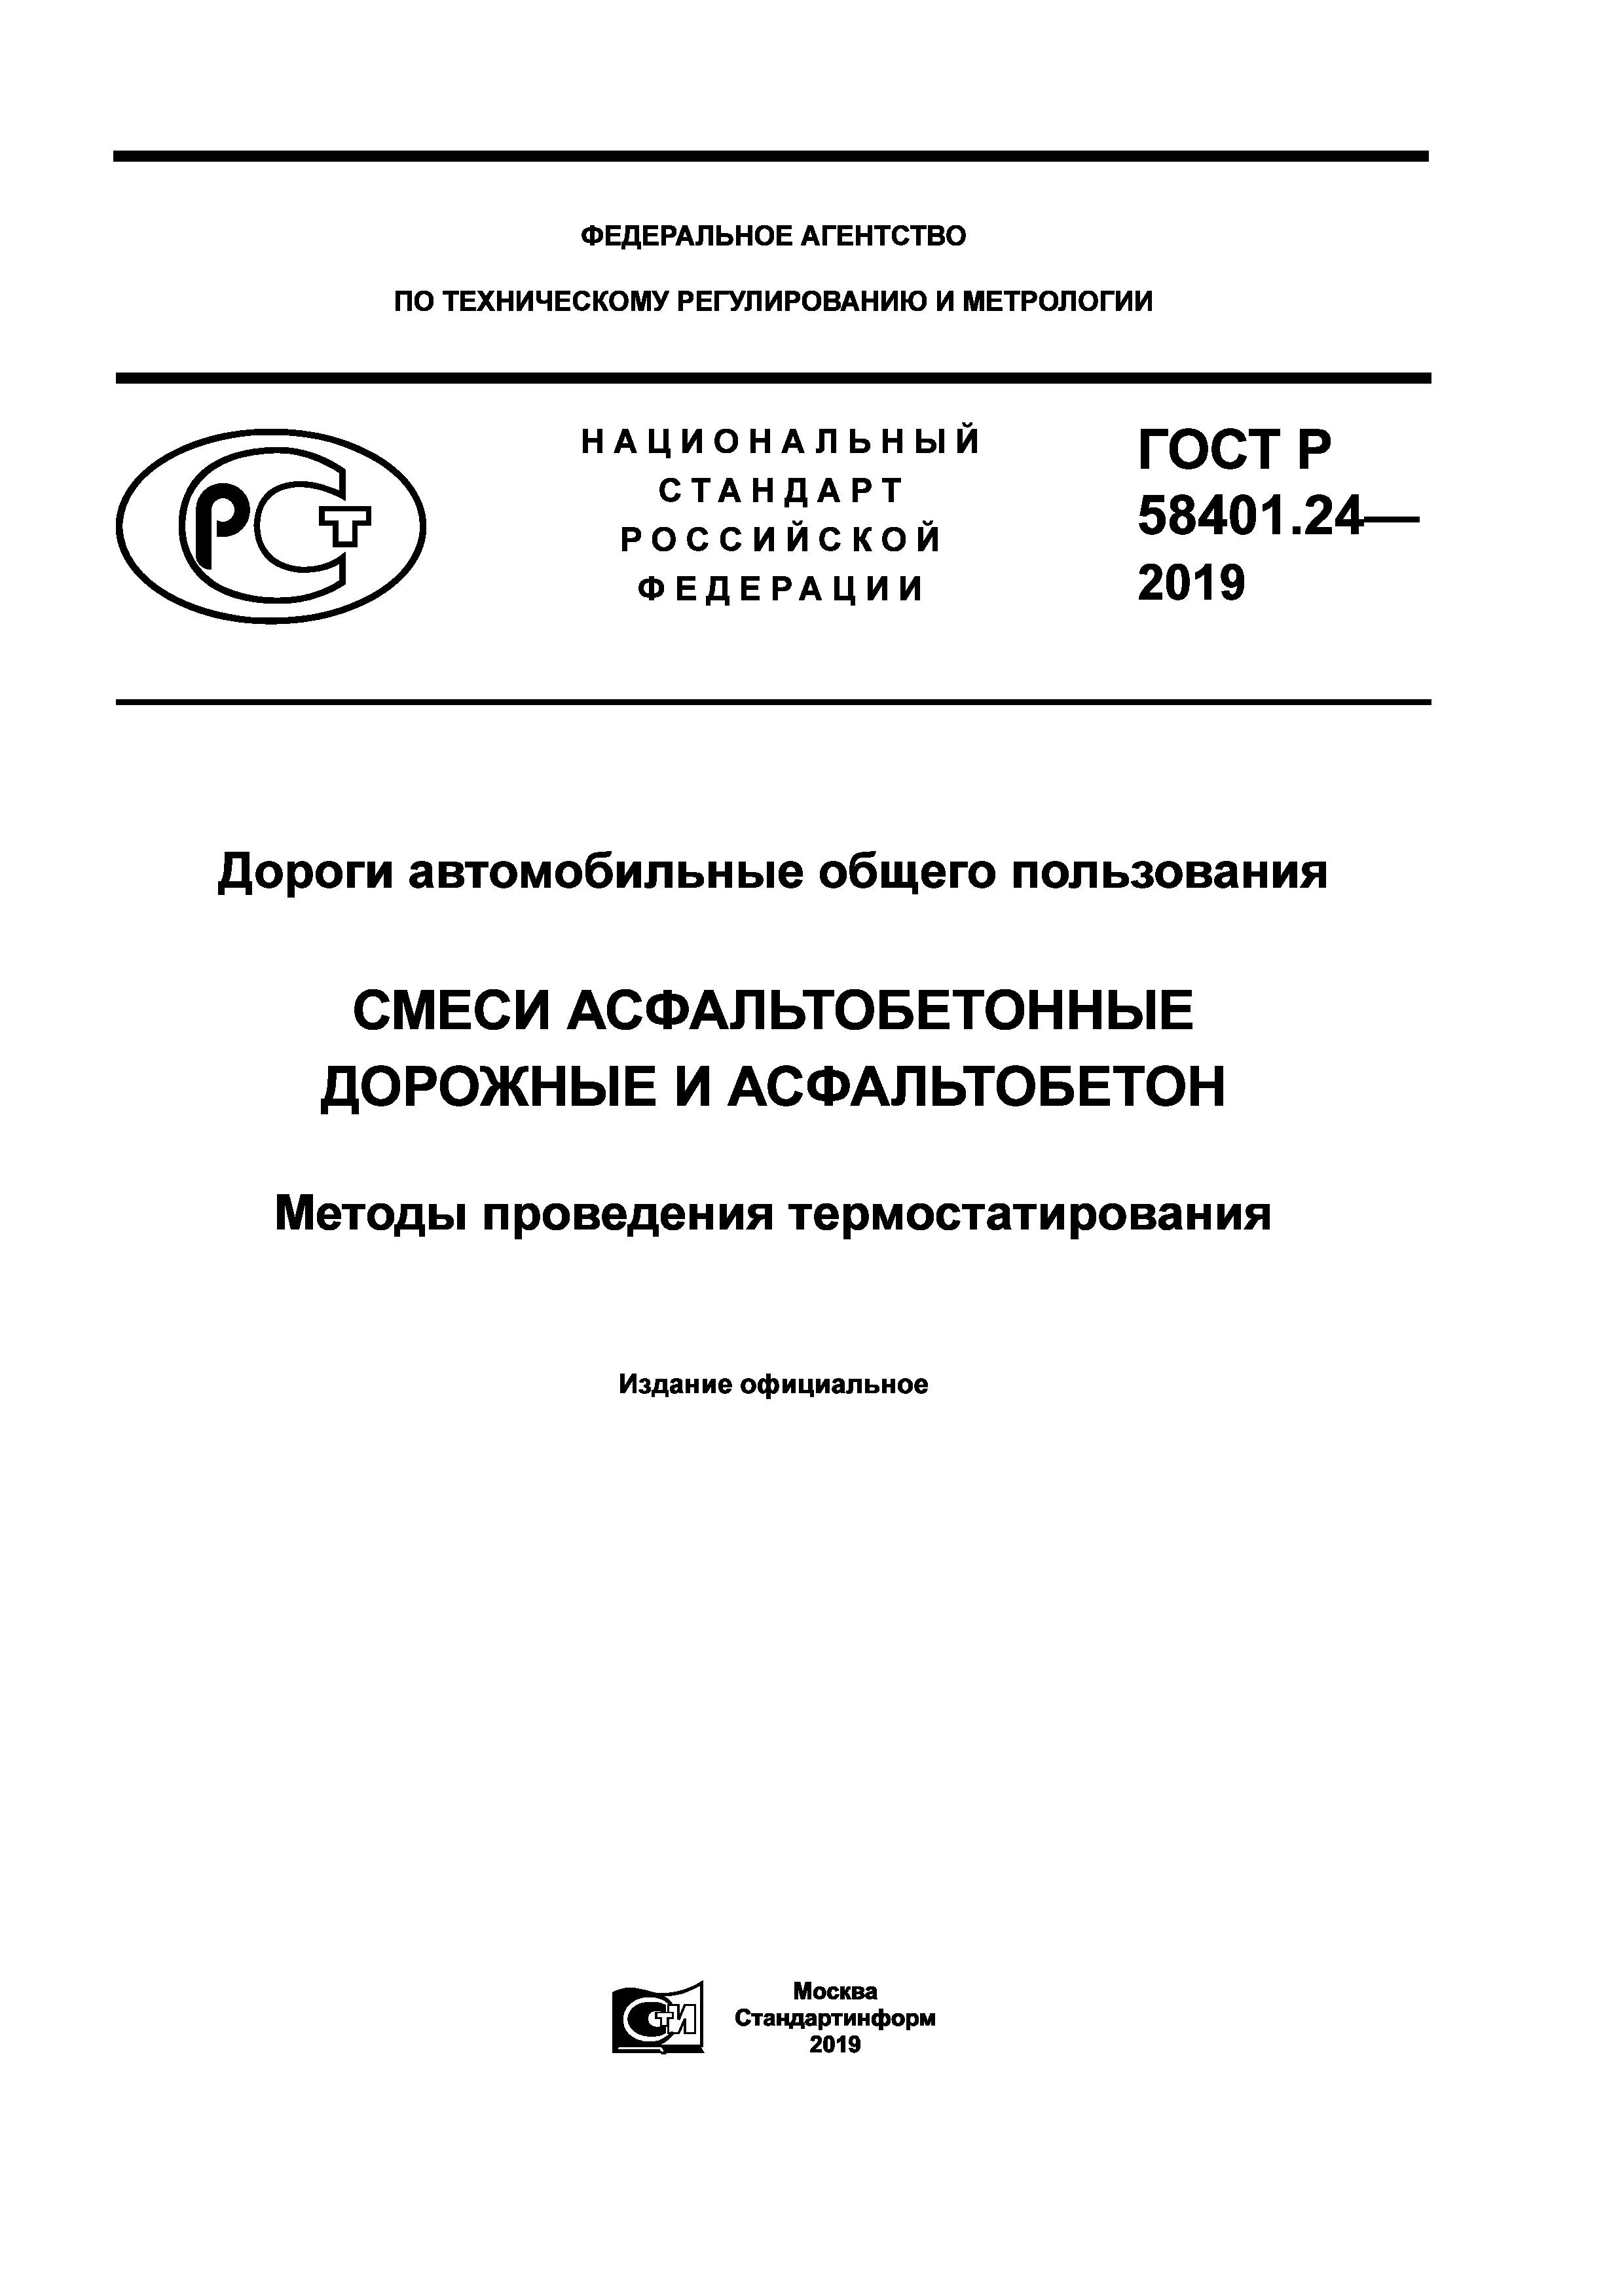 ГОСТ Р 58401.24-2019